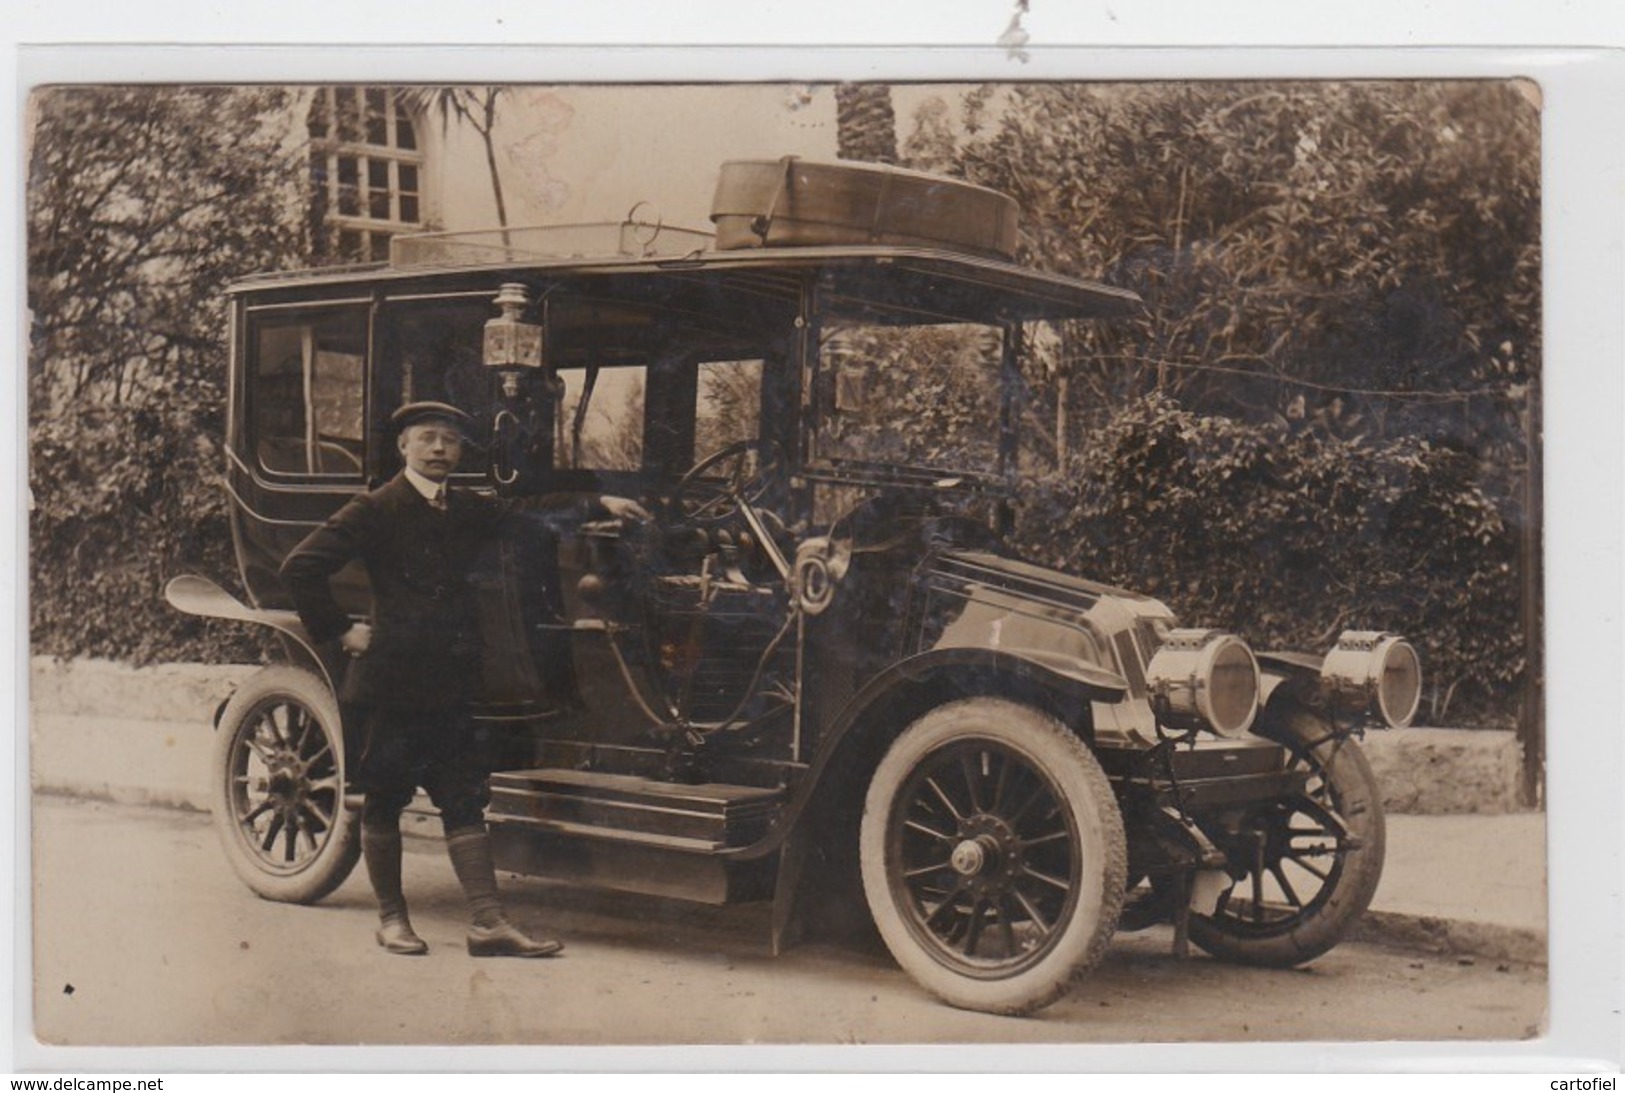 CARTE PHOTO-AUTOMOBILE-AUTO-CAR-TAXI-VOITURE BELGE-NICE-ANVERS-CARTE ENVOYEE-1910-RARE ! ! ! - Taxis & Cabs